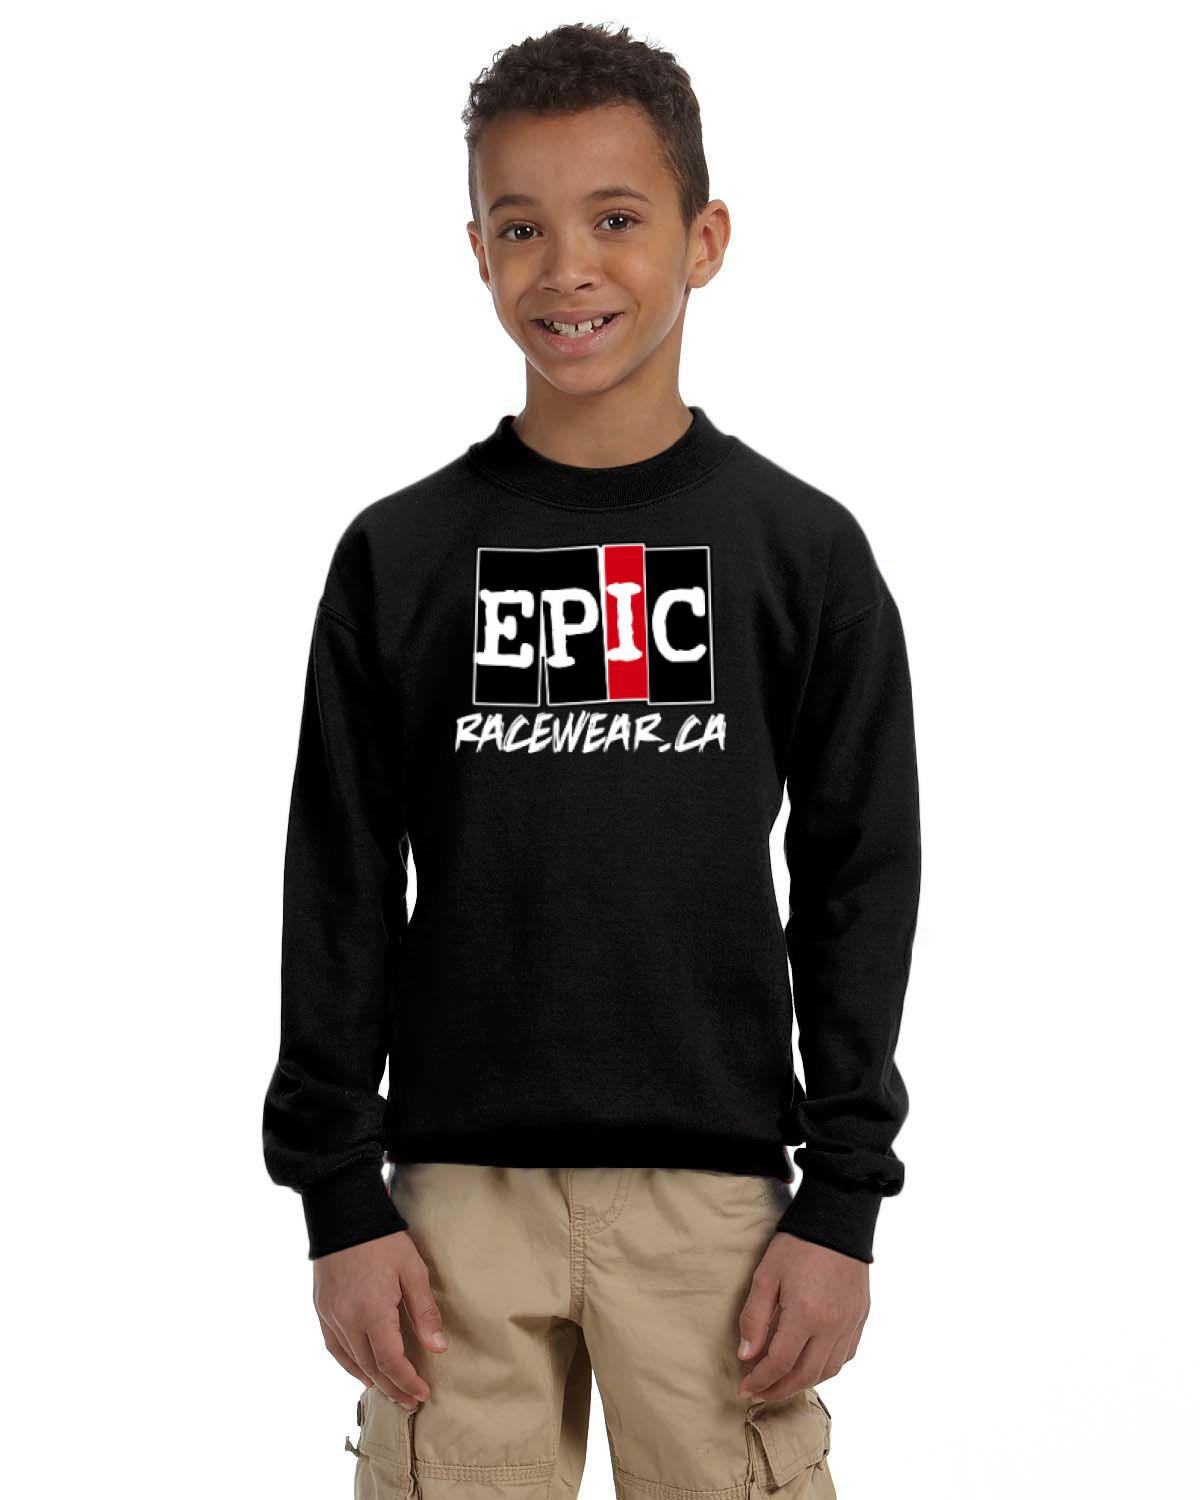 EPIC Racewear Youth Crew Neck Sweater